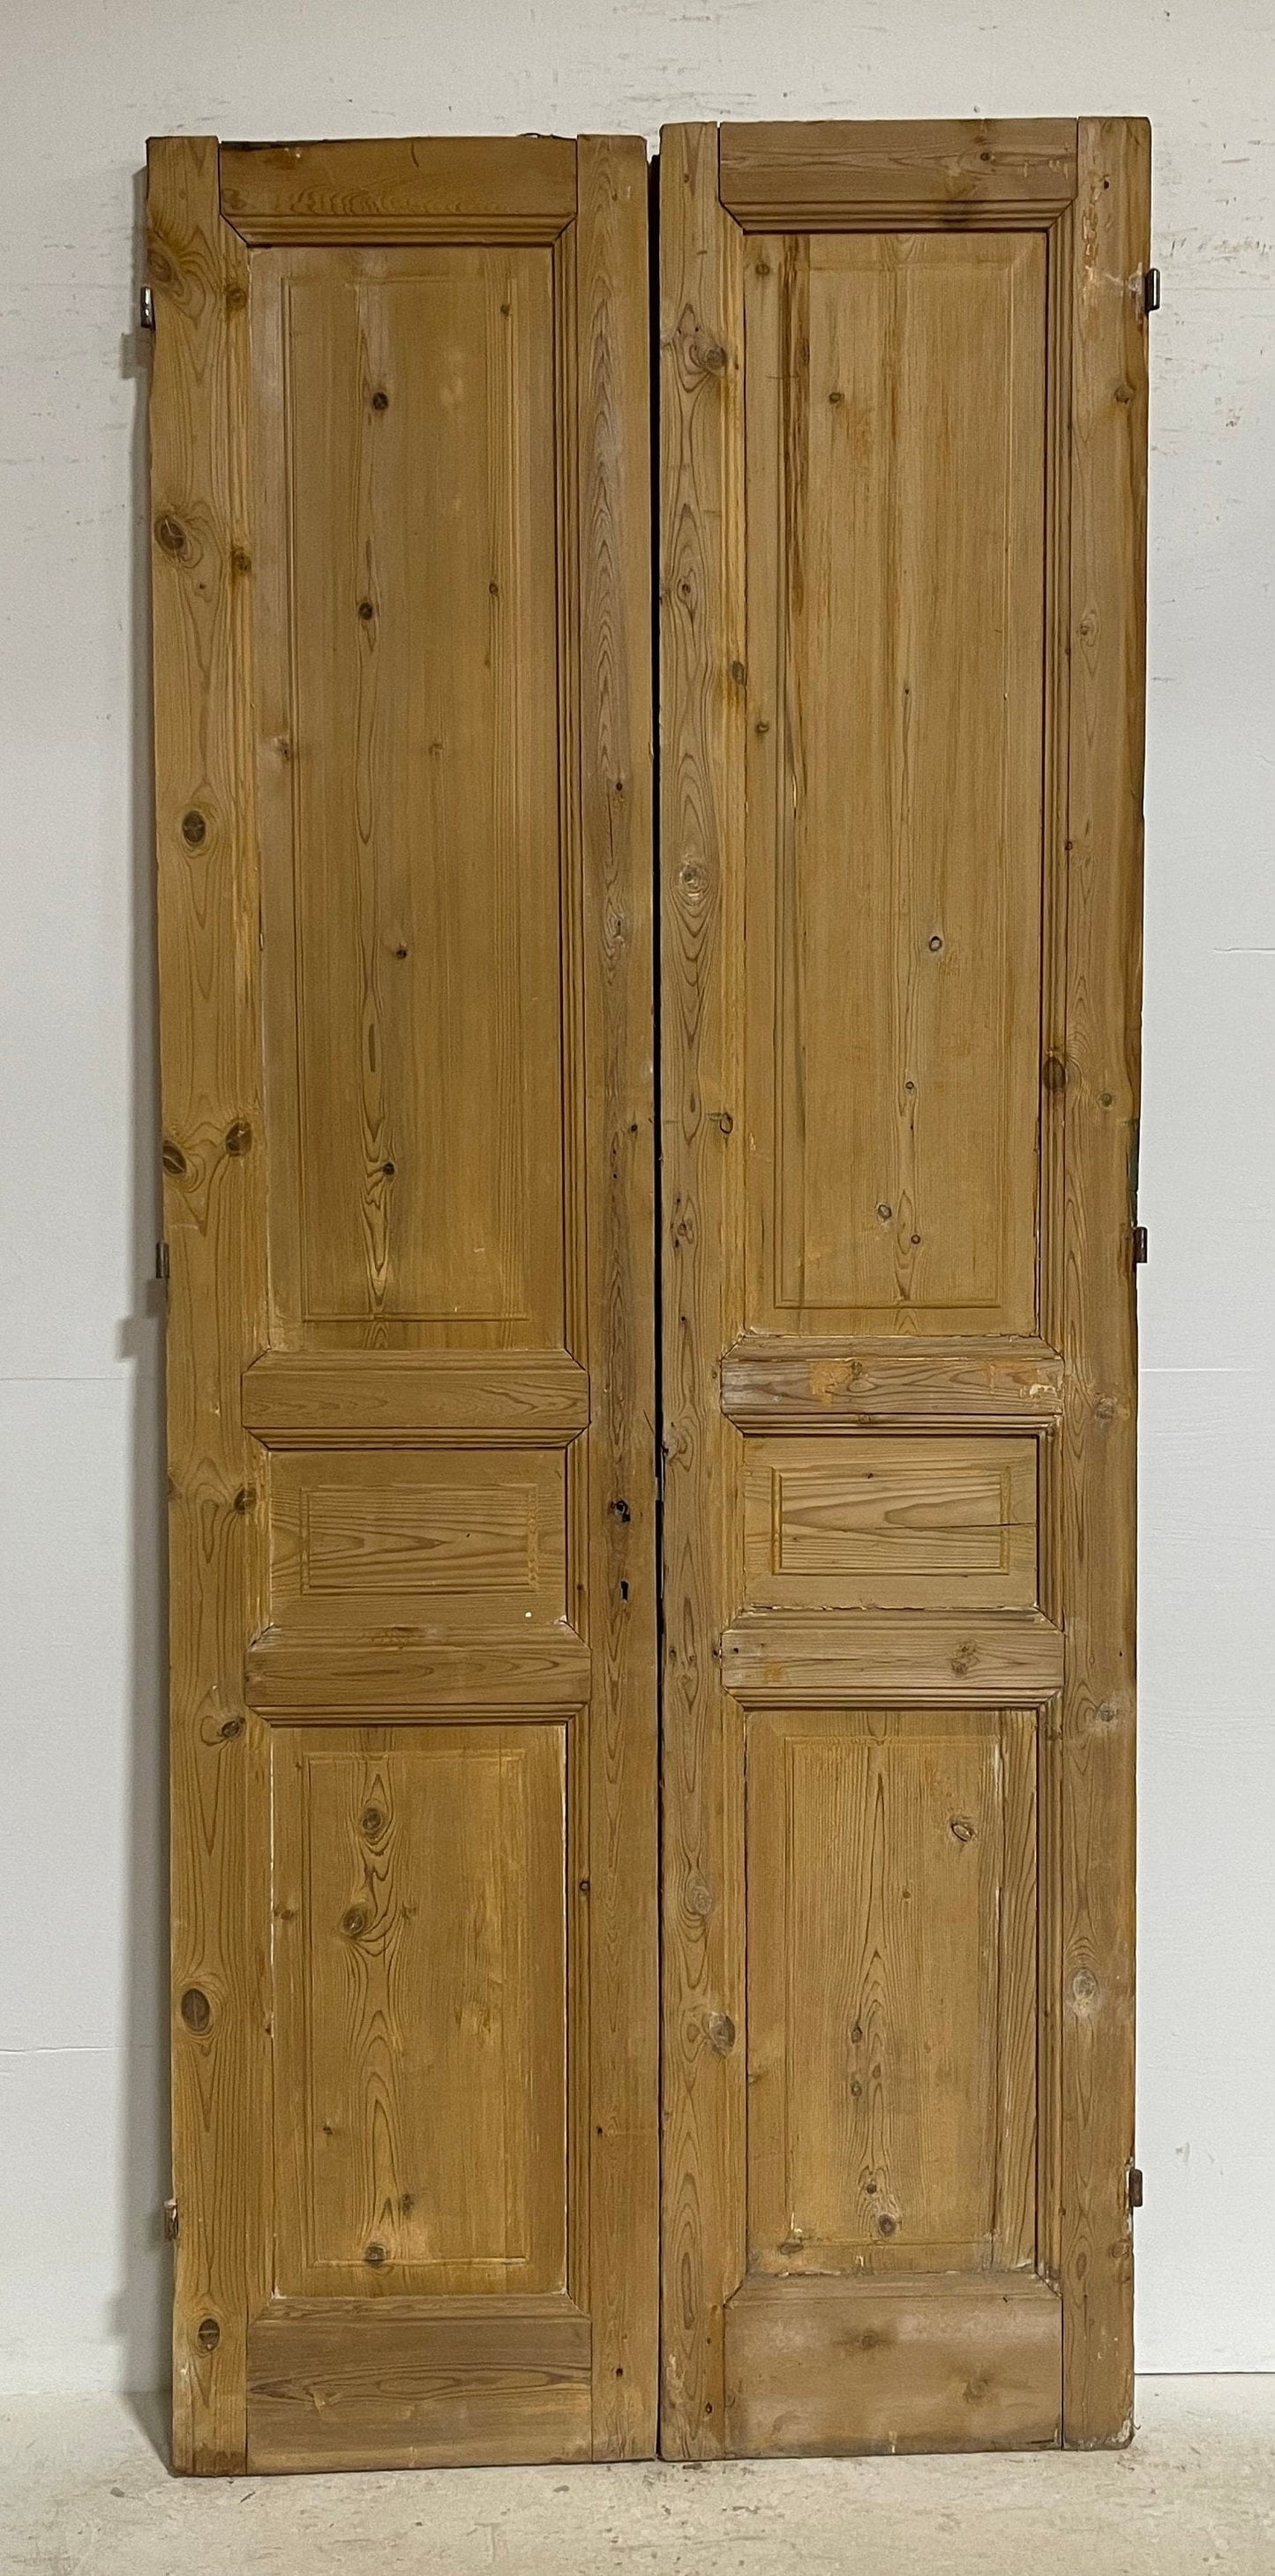 Antique French panel doors (101.5x42.75) G0182s